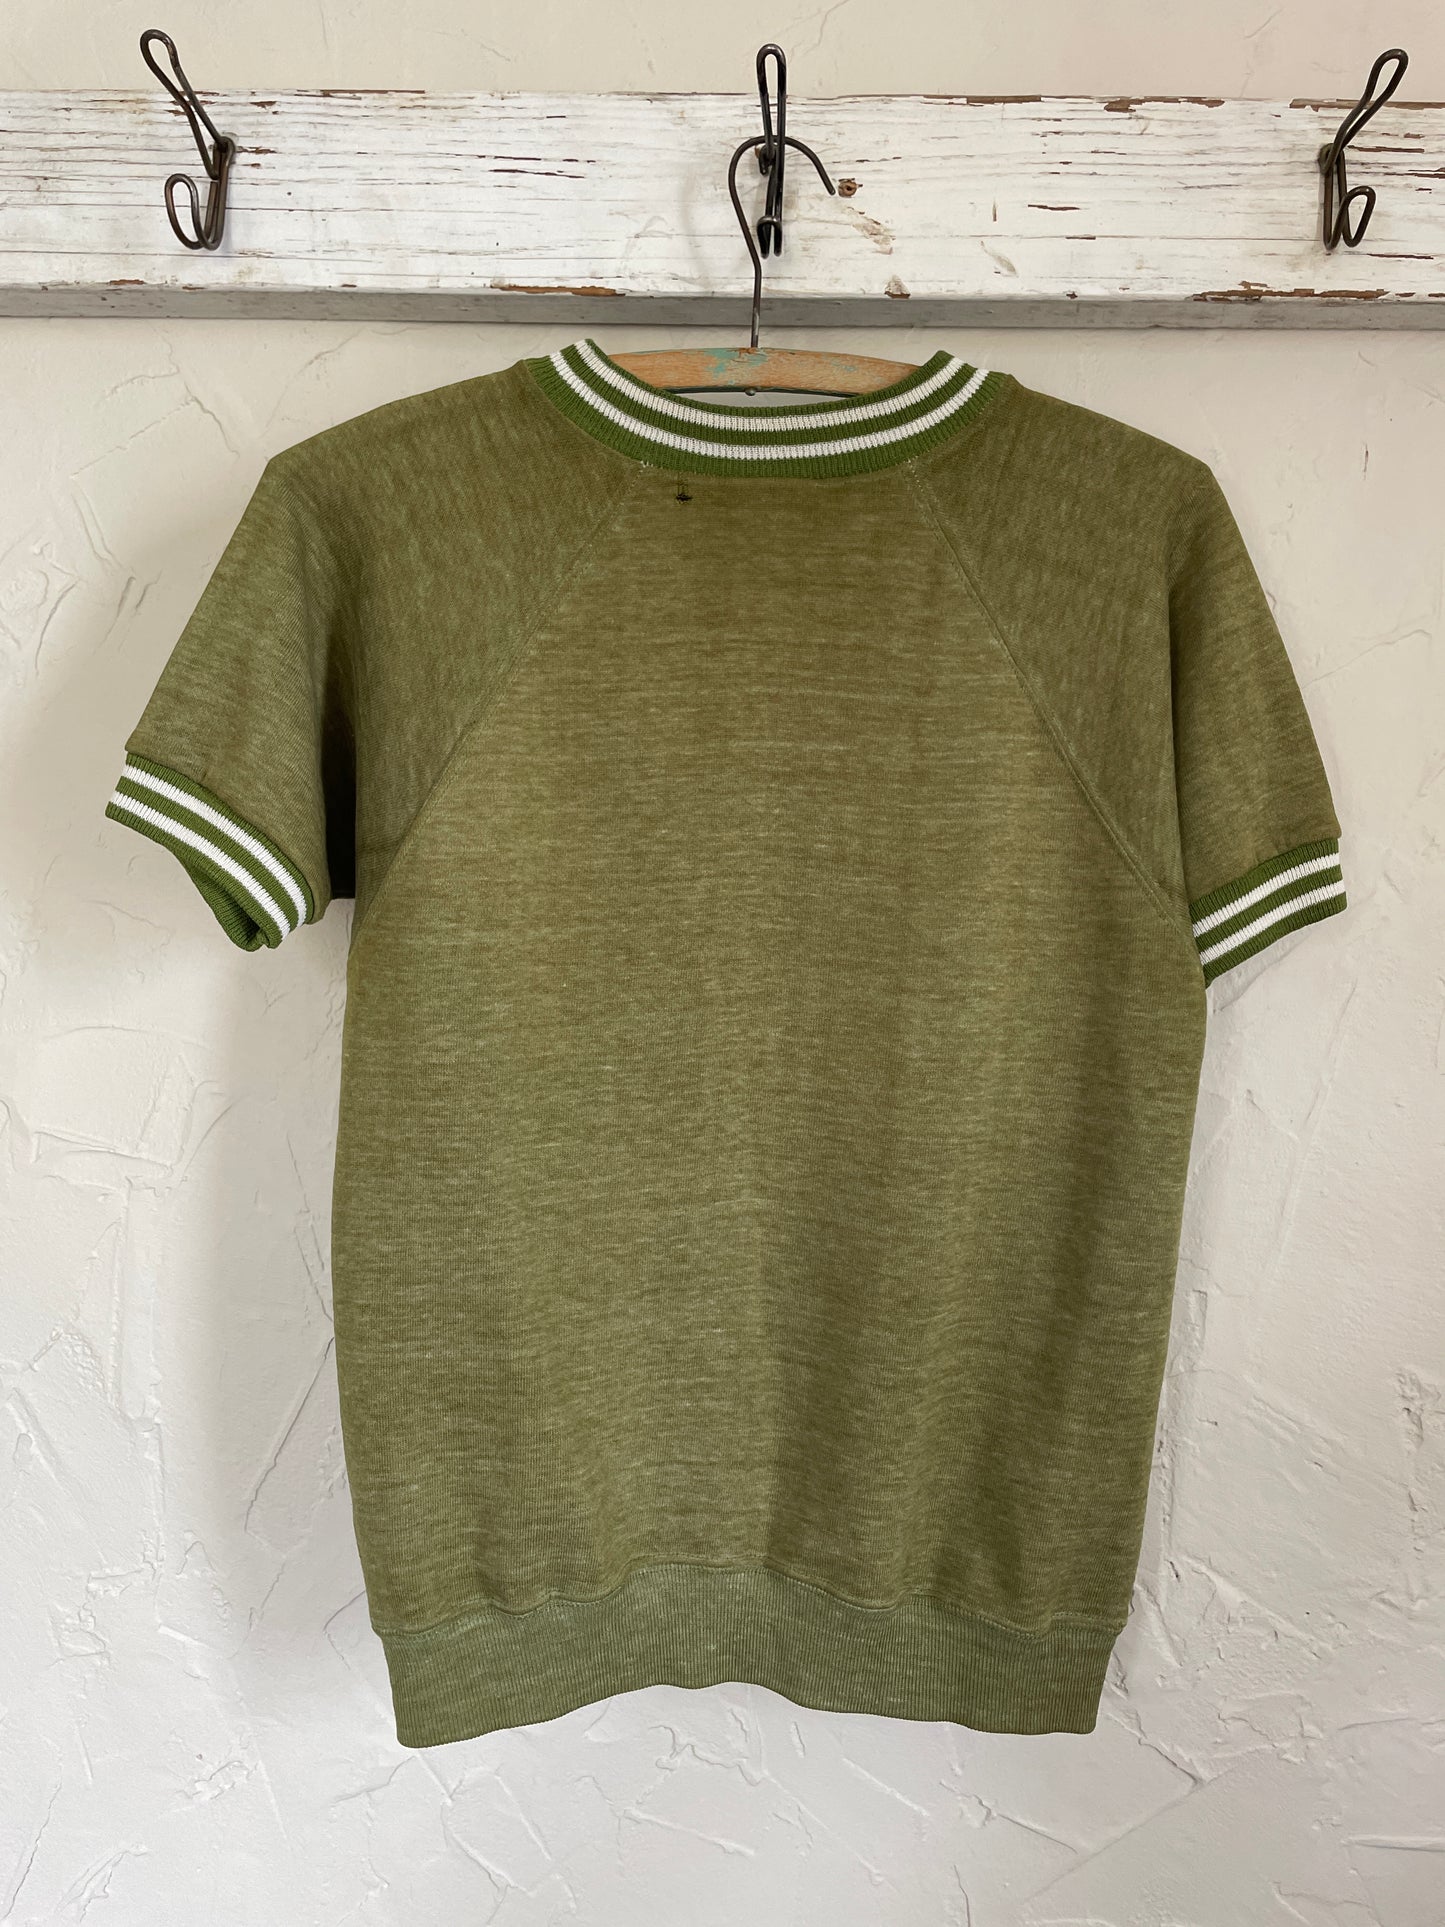 70s Avocado Green Sweatshirt